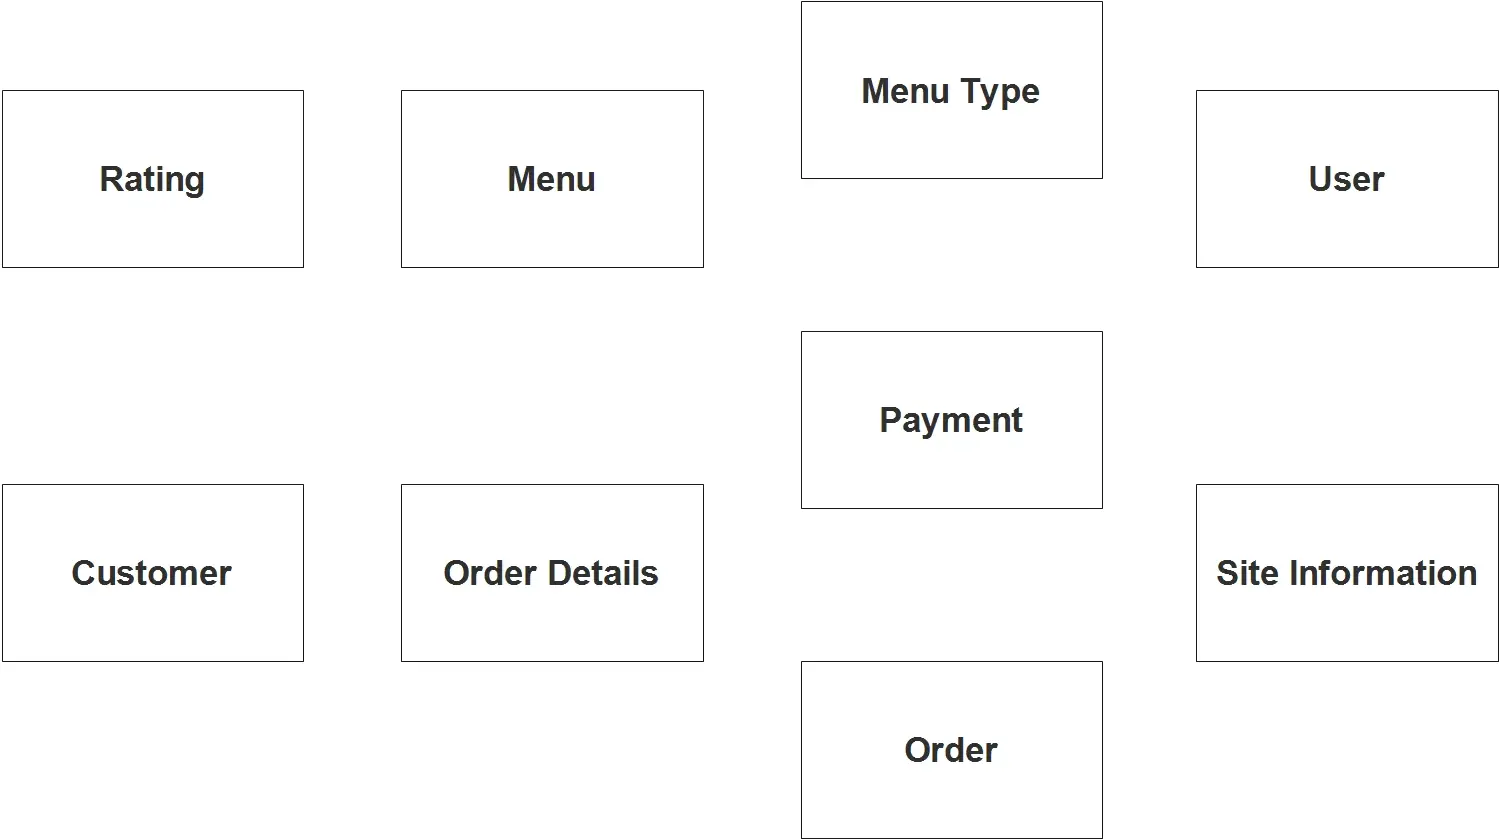 Online Food Ordering System ER Diagram - Step 1 Identify Entities